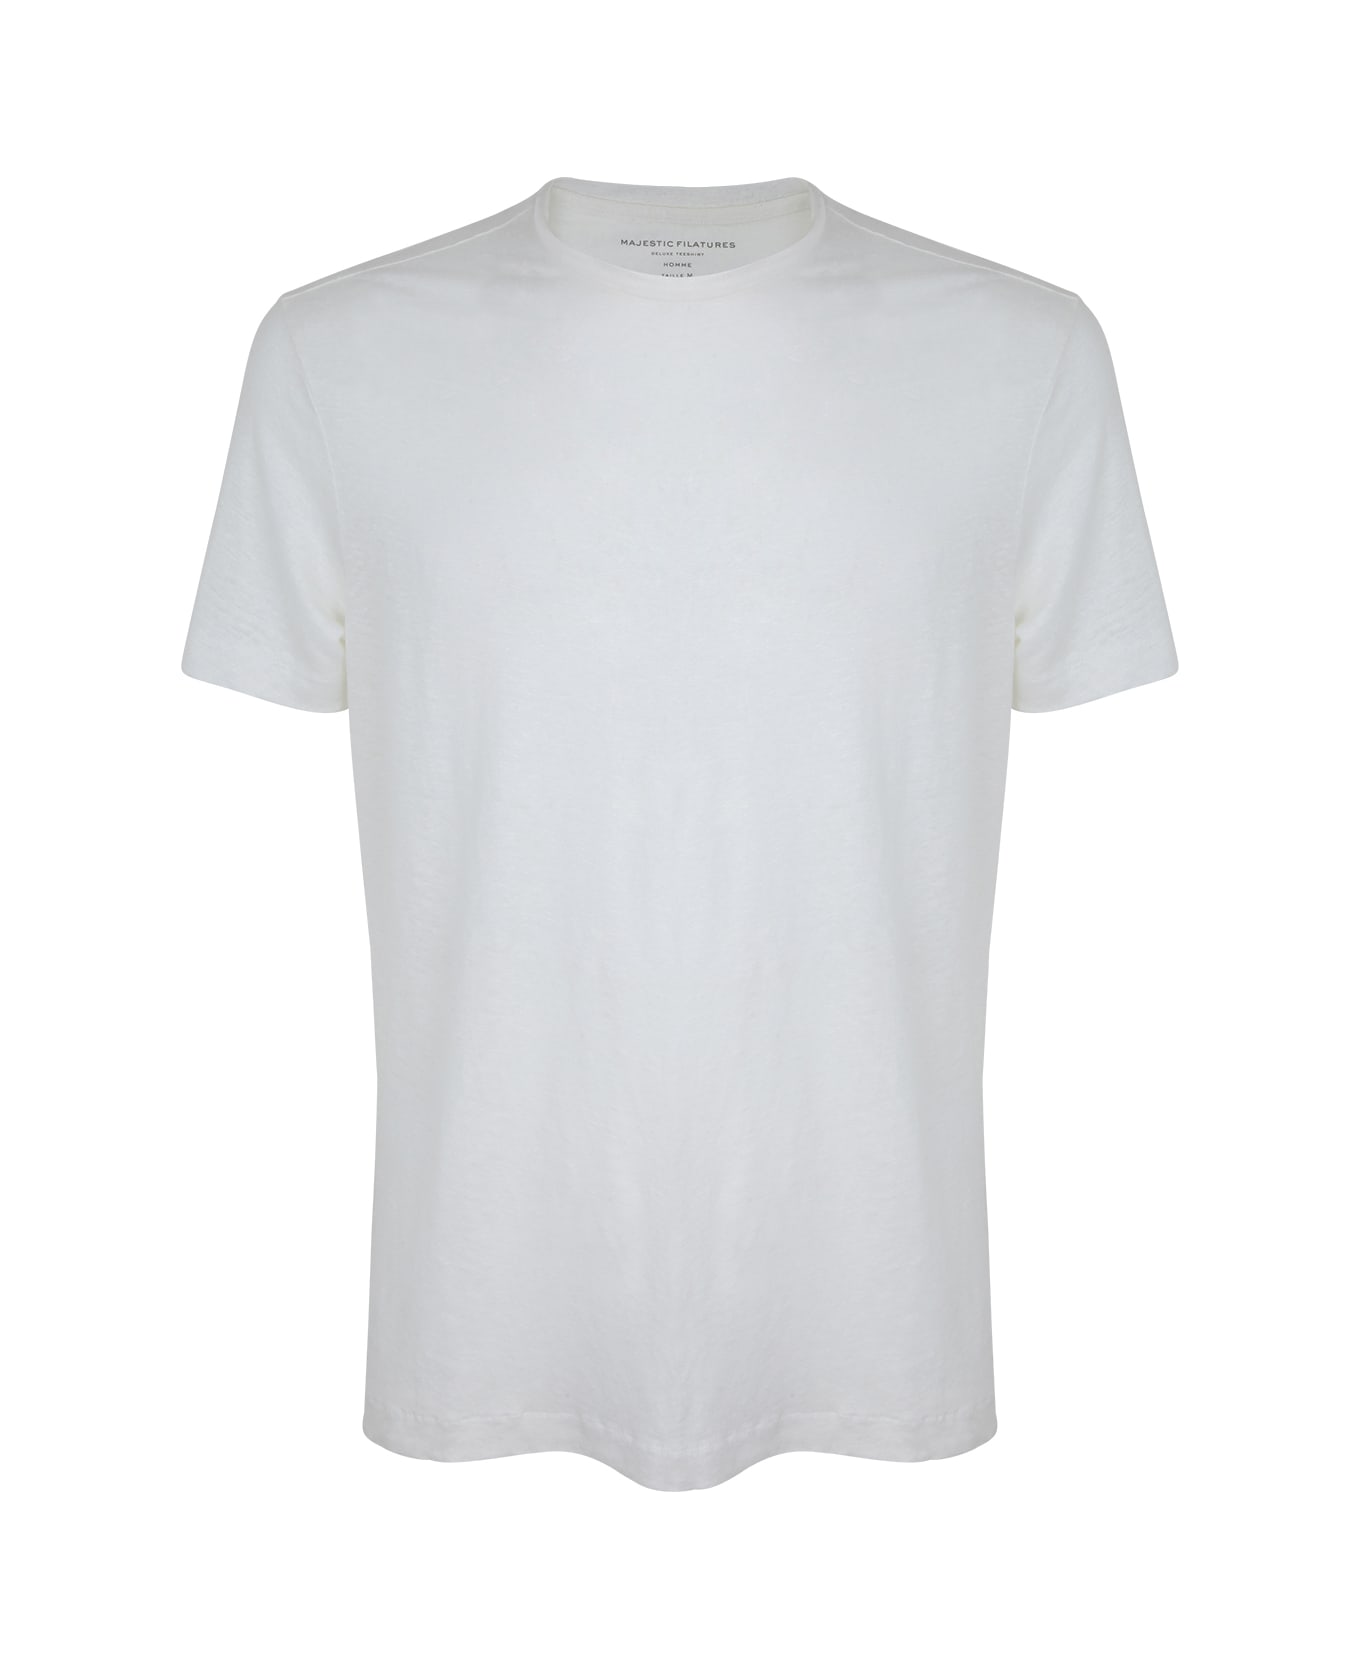 Majestic Filatures Short Sleeves Crew Neck T-shirt - White